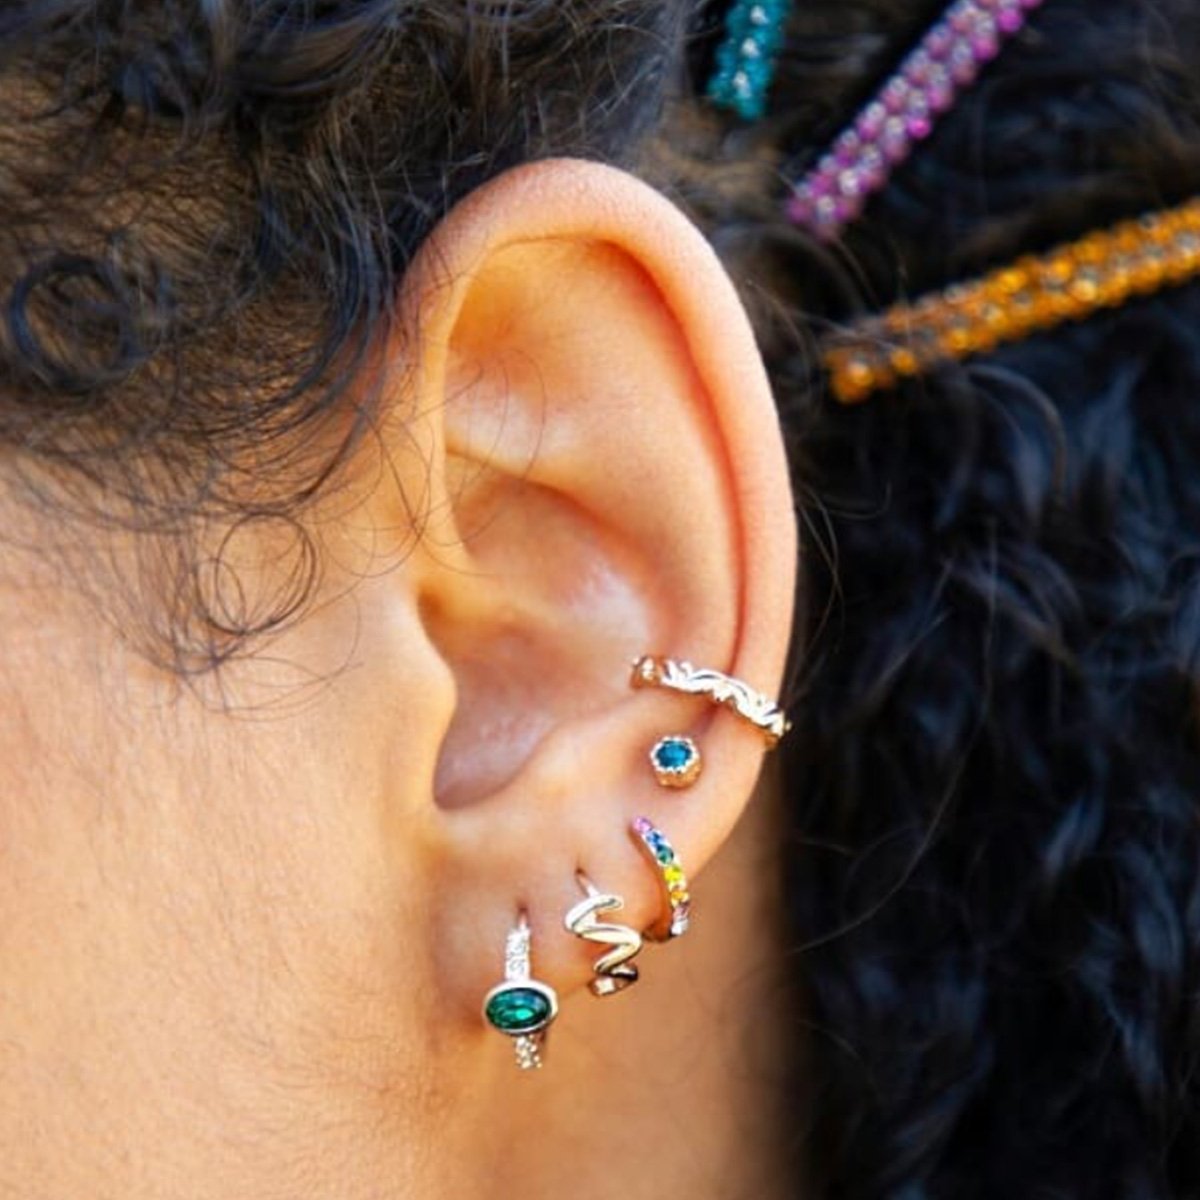 Carousel Image of Girl wearing a Lovisa Ear Stack